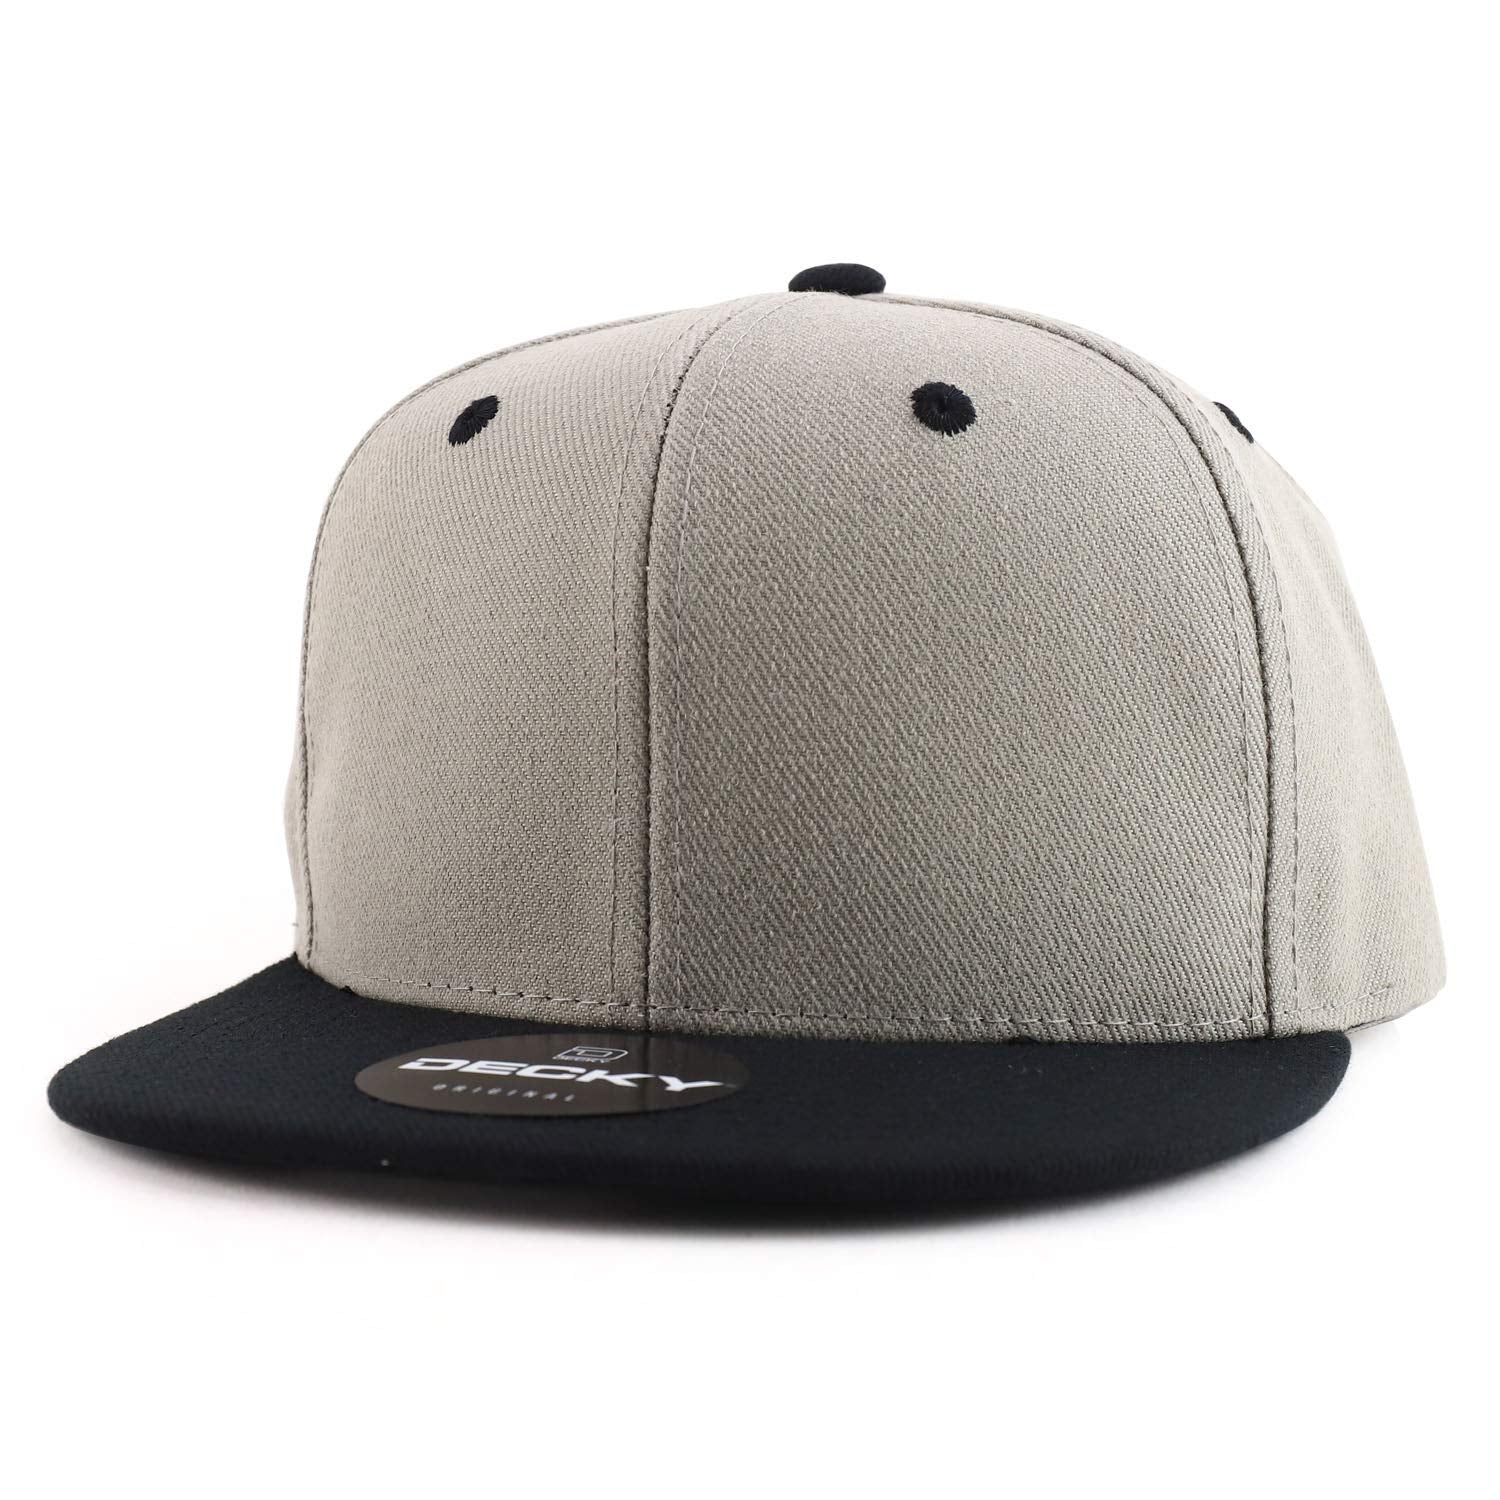 Armycrew Women's Size Two Tone Flatbill Snapback Baseball Cap